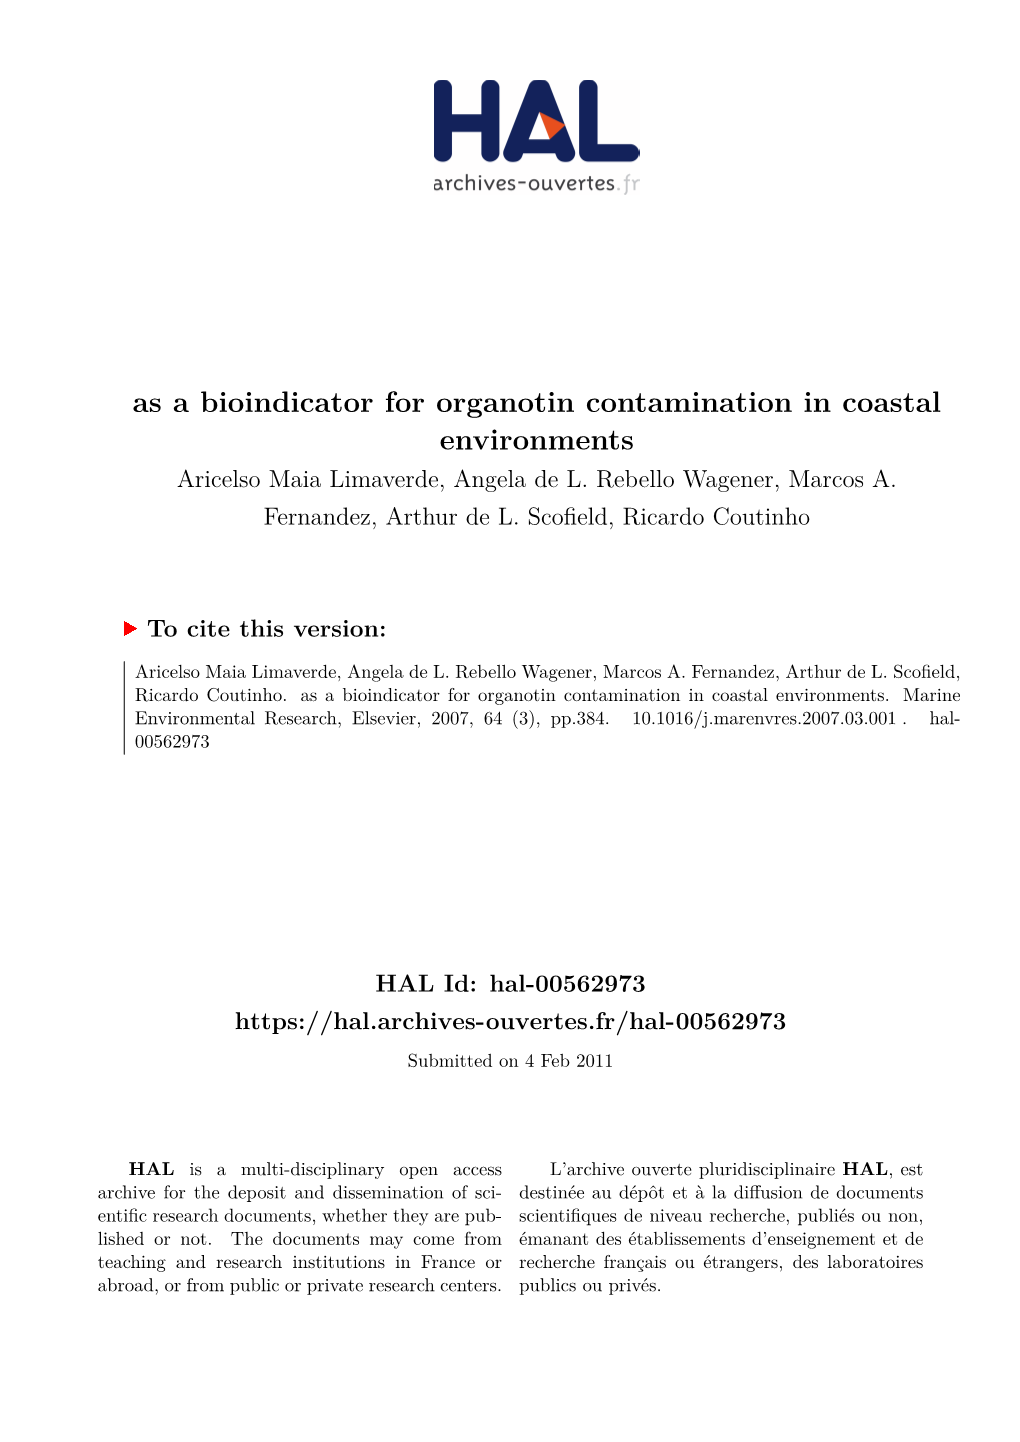 As a Bioindicator for Organotin Contamination in Coastal Environments Aricelso Maia Limaverde, Angela De L